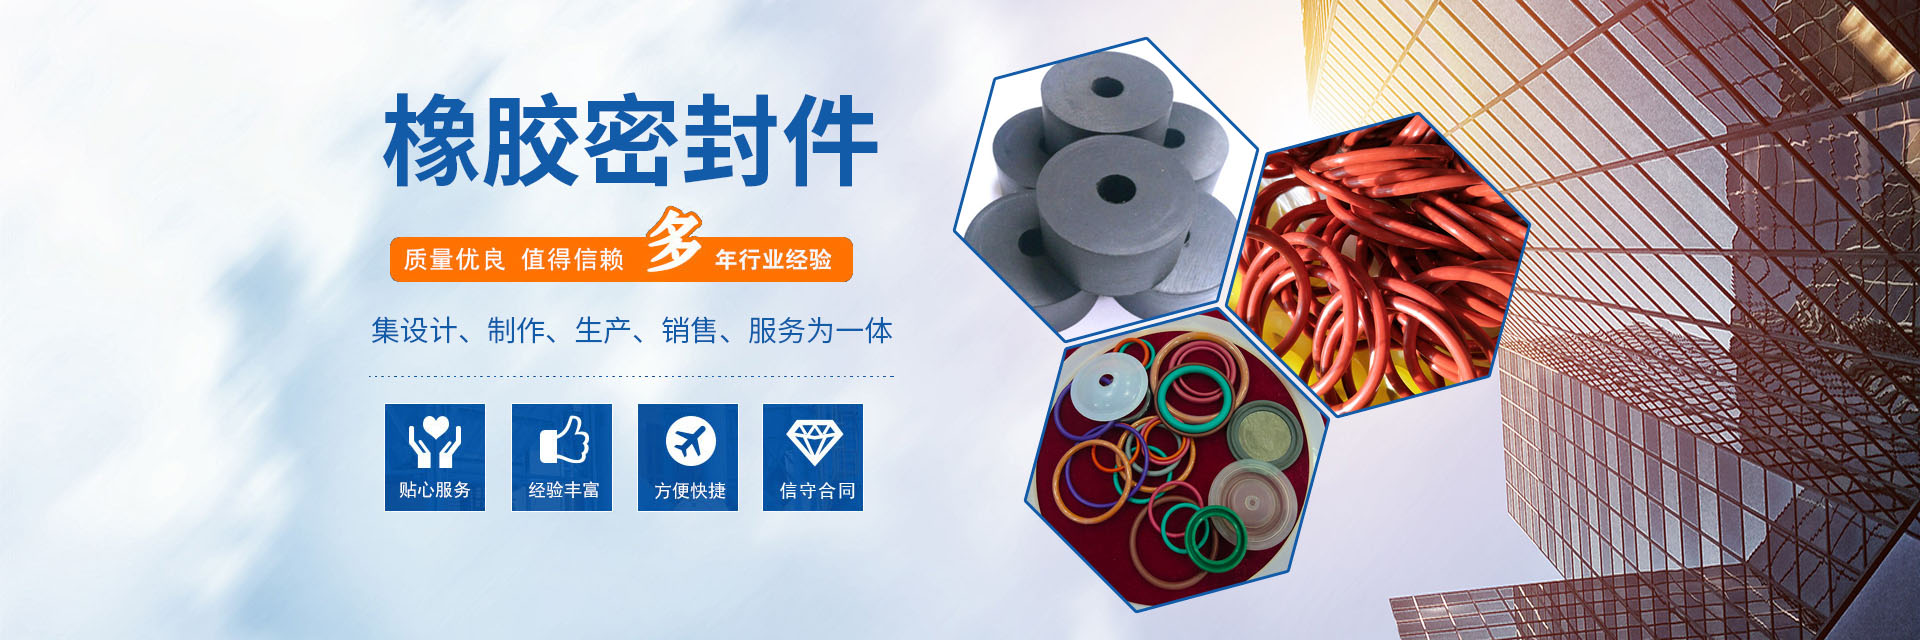 Suzhou Nihone Electronic Technology Co., Ltd.